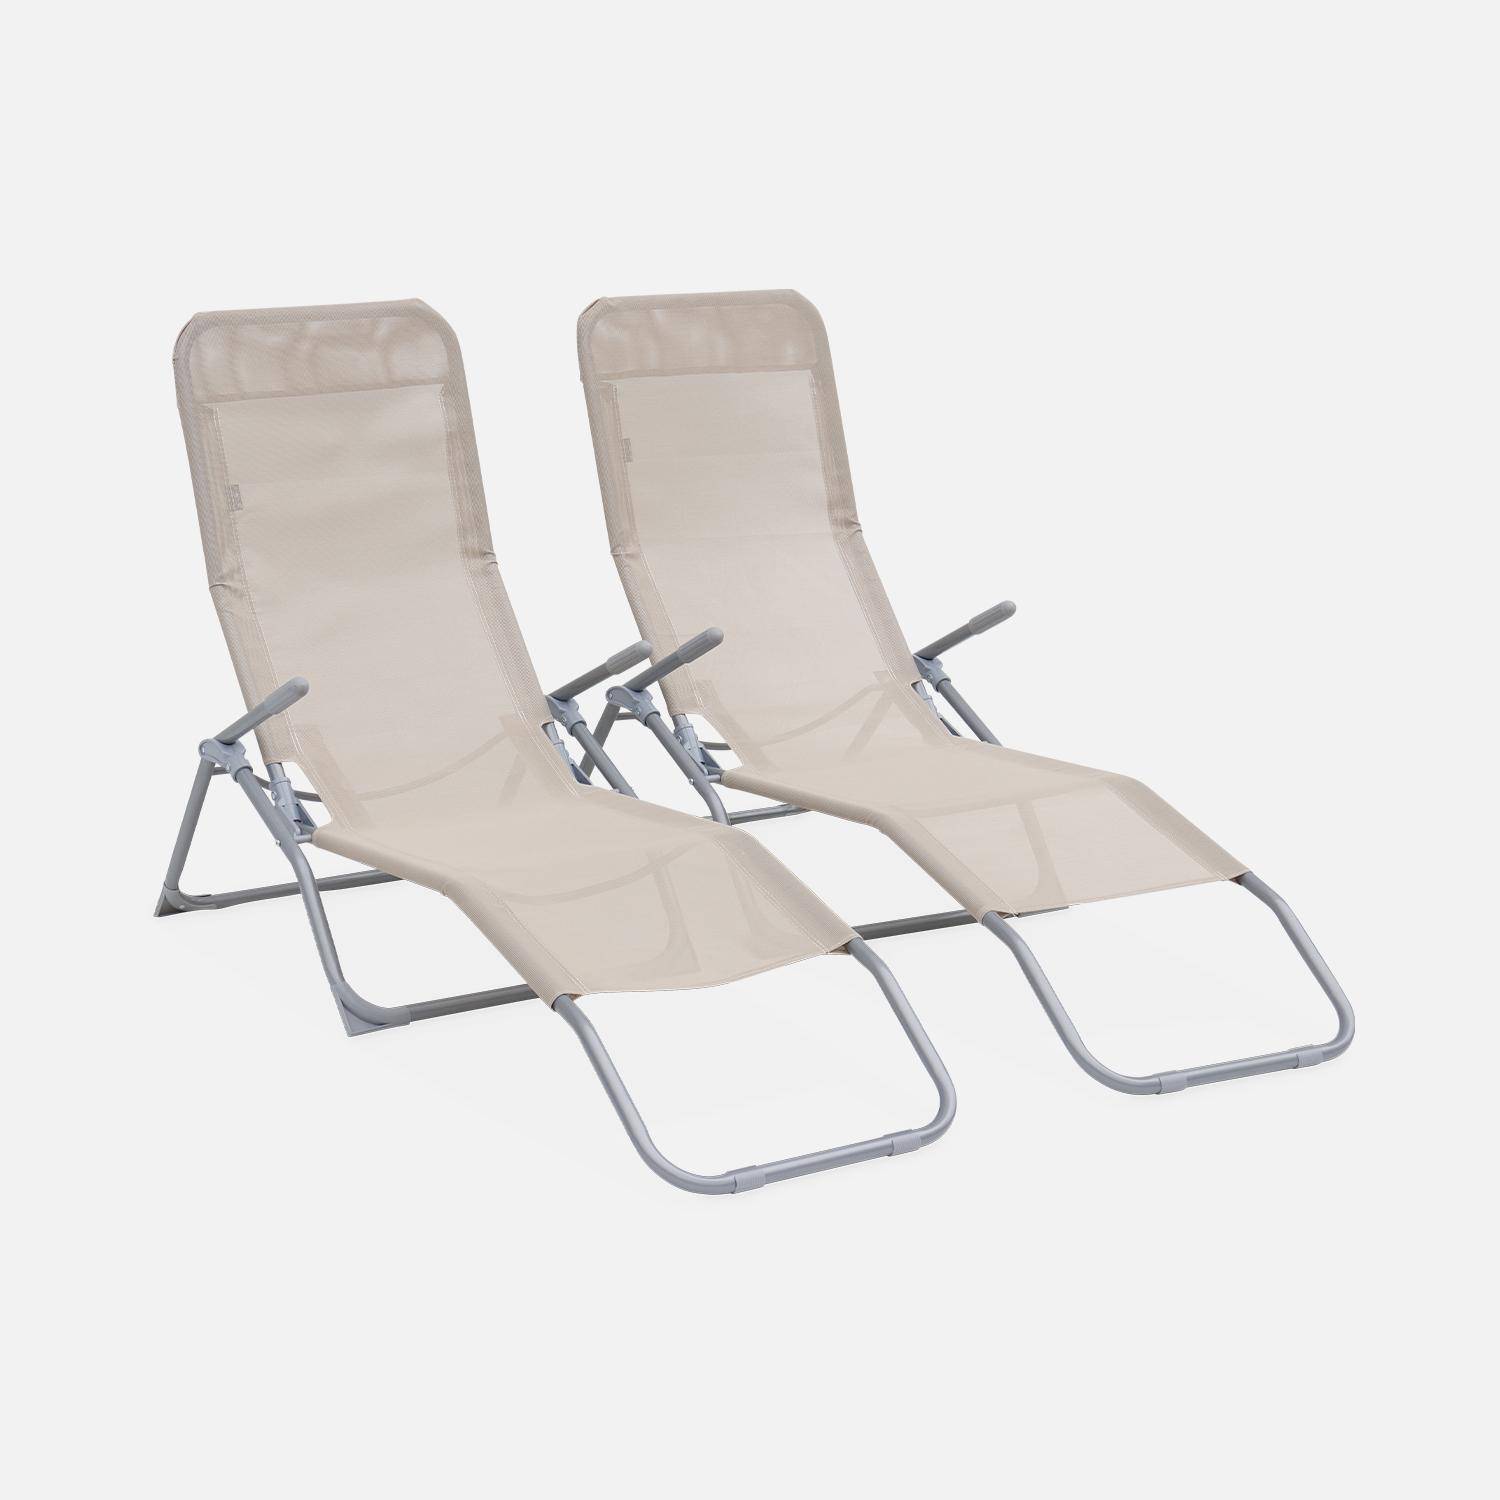 Set van 2 opvouwbare ligstoelen - Levito Taupe - Ligstoelen van textileen, 2 posities, opvouwbare ligstoelen,sweeek,Photo1